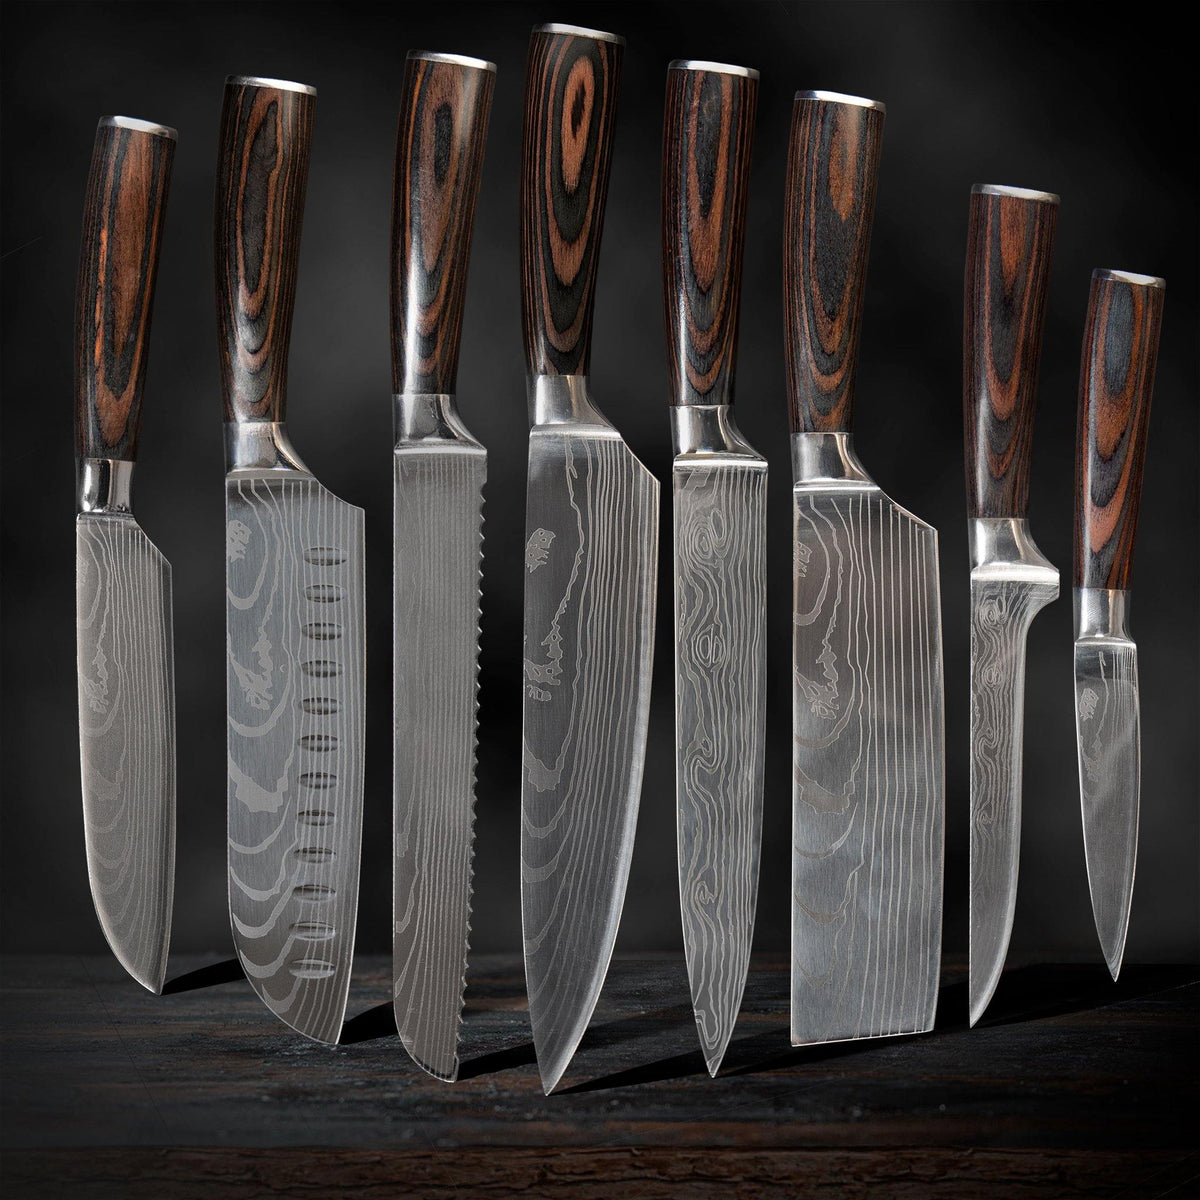 5 Japanese Utility Knives| Samurai Series